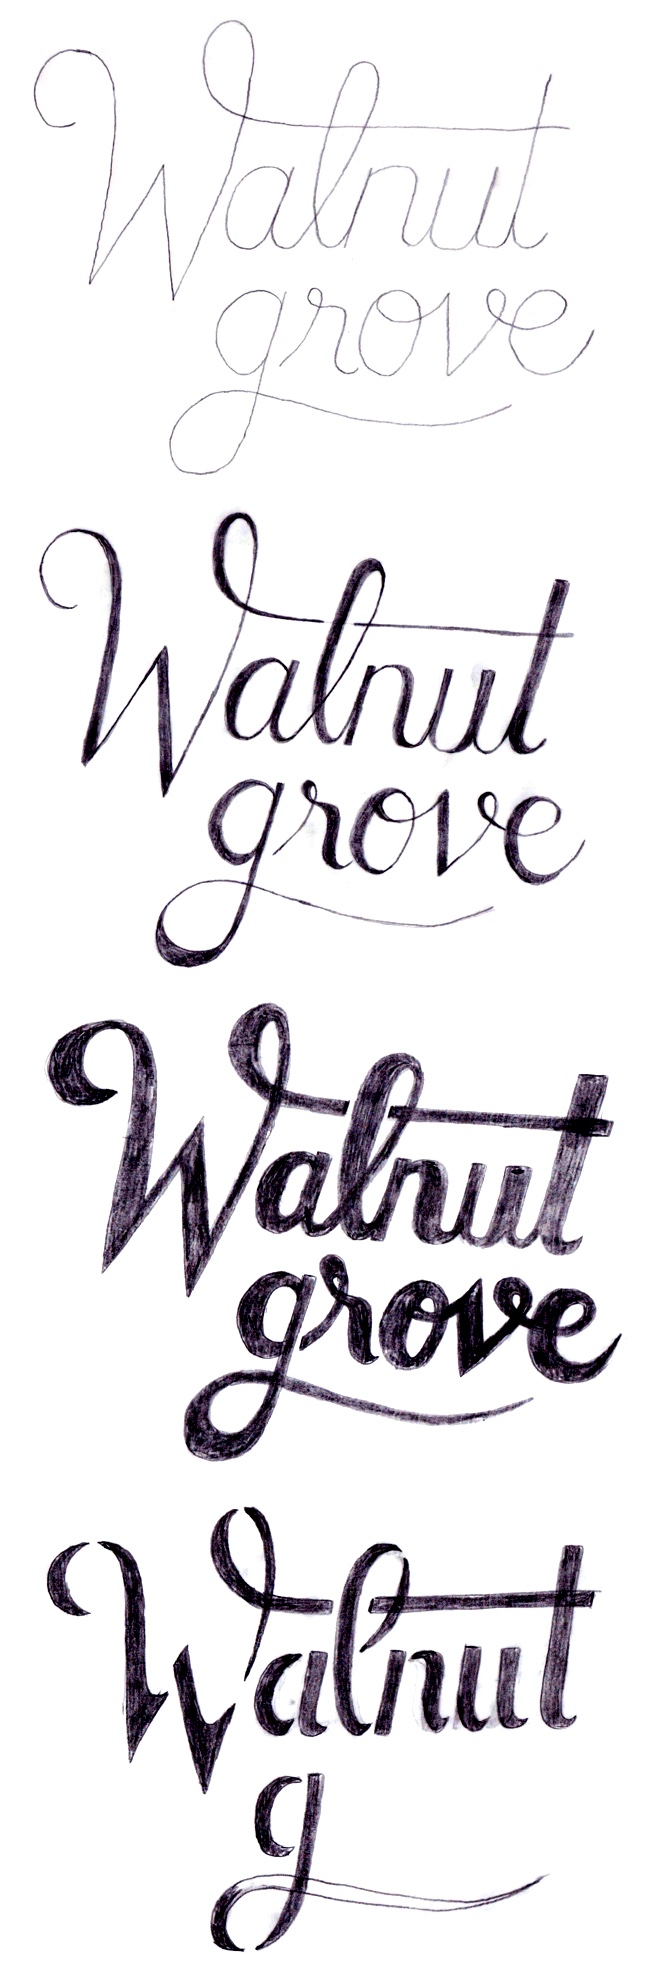 R.I.P. Walnut Grove